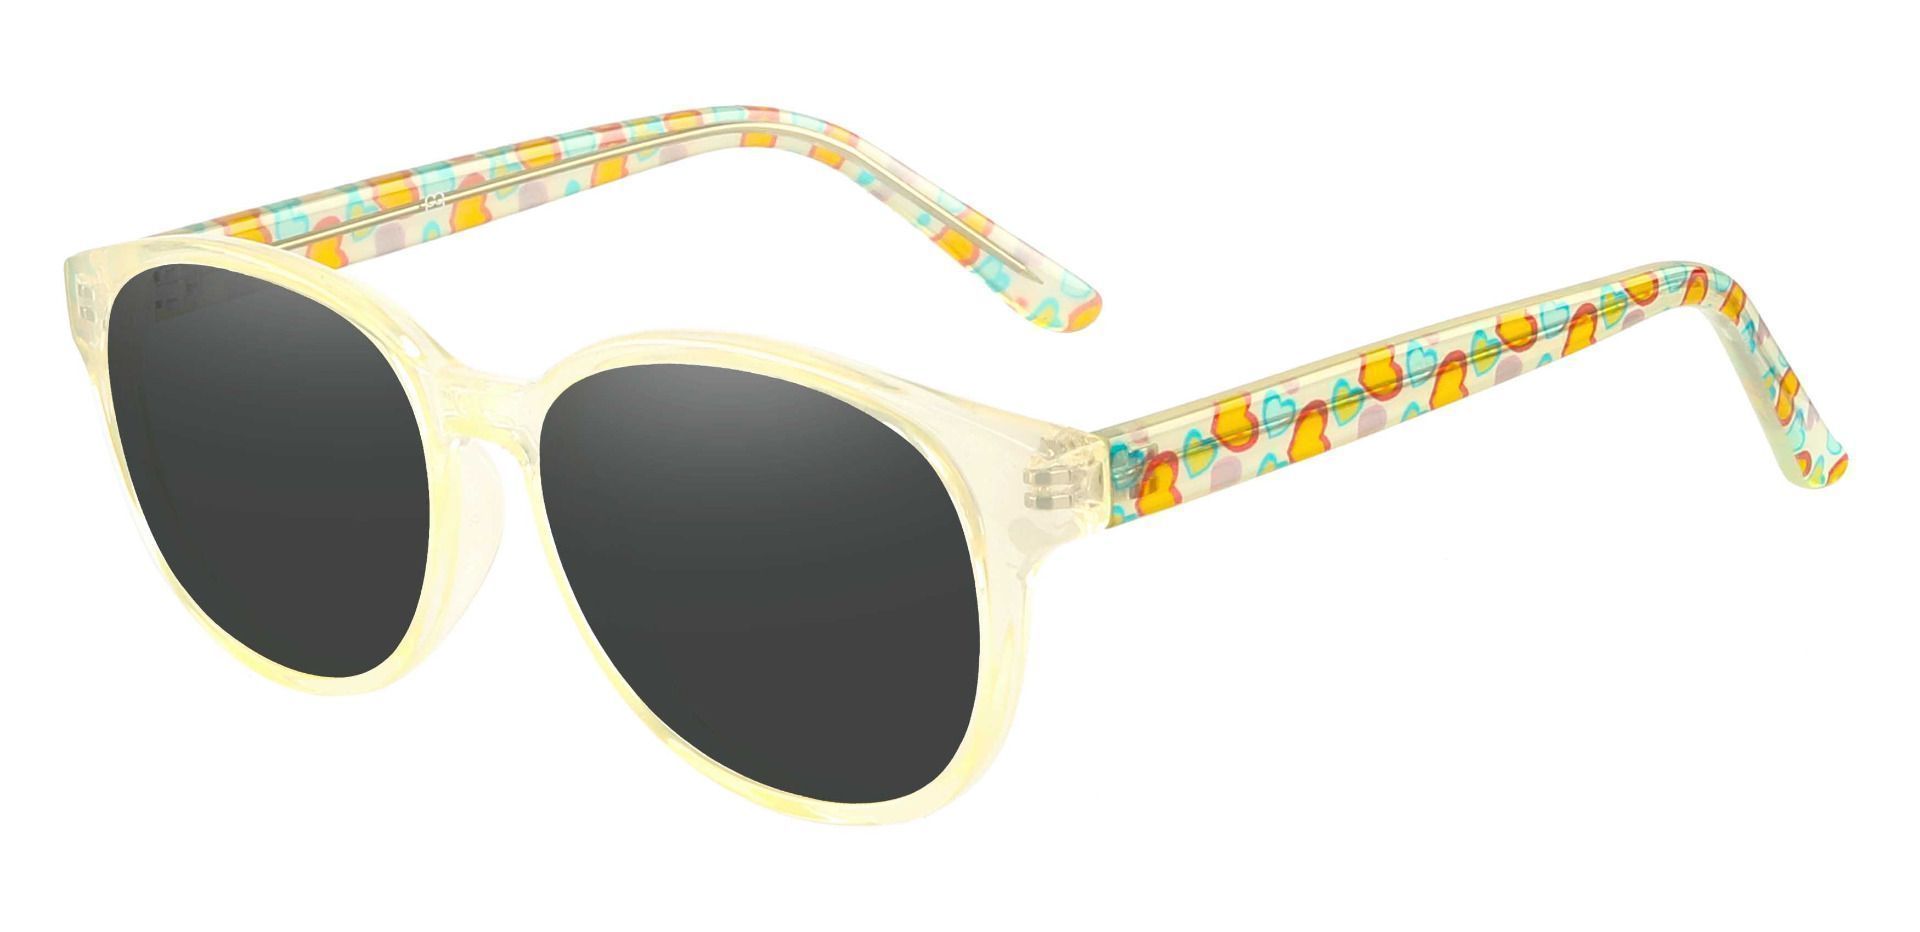 Allegra Oval Prescription Sunglasses - Green Frame With Gray Lenses